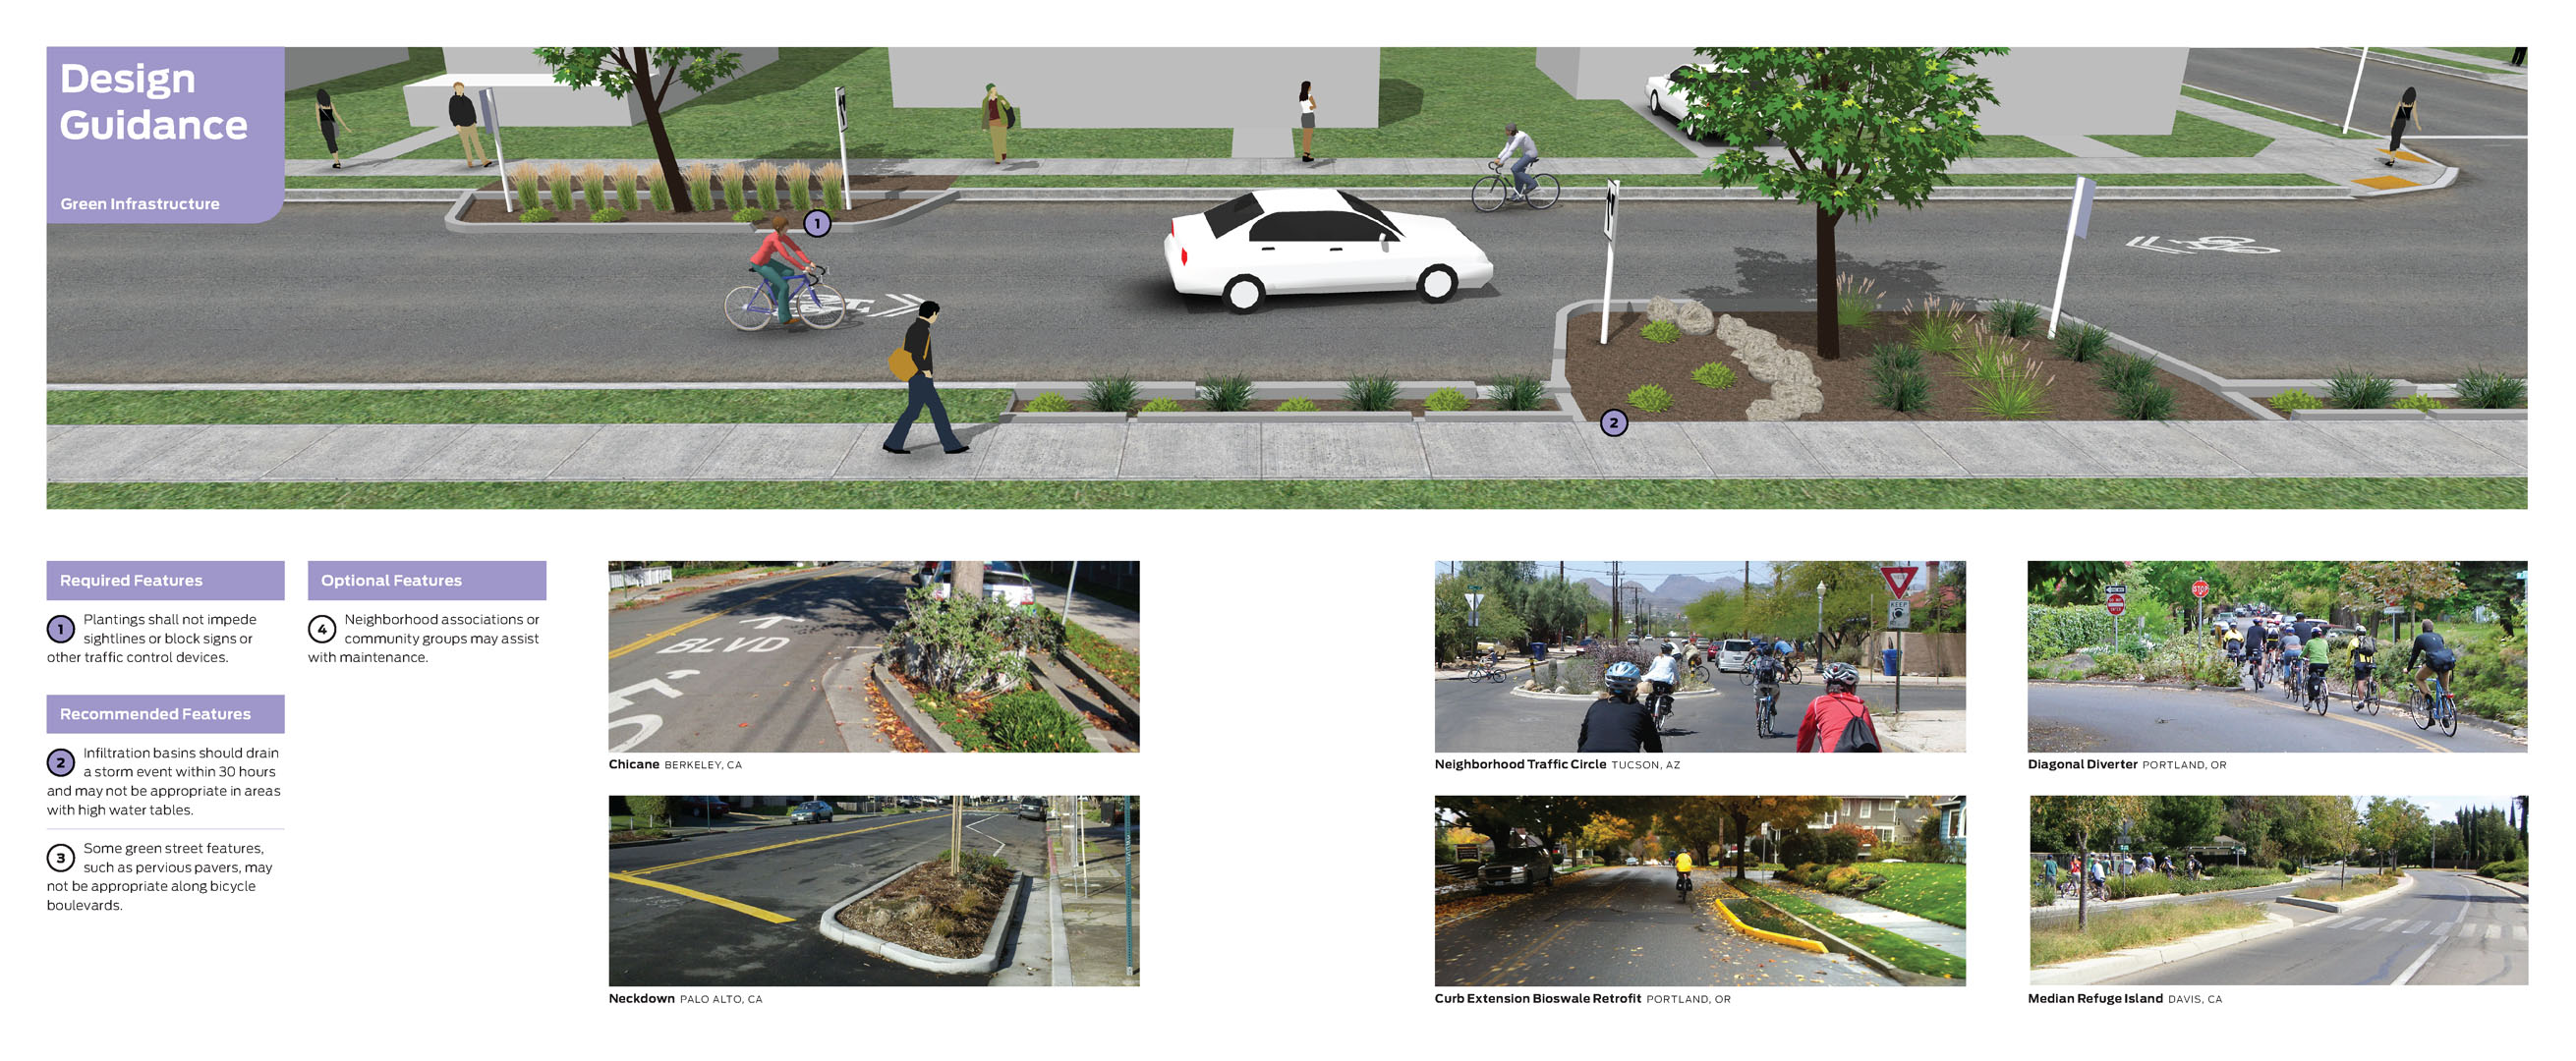 Design Guidance for green infrastructure via National Association of City Transportation Officials